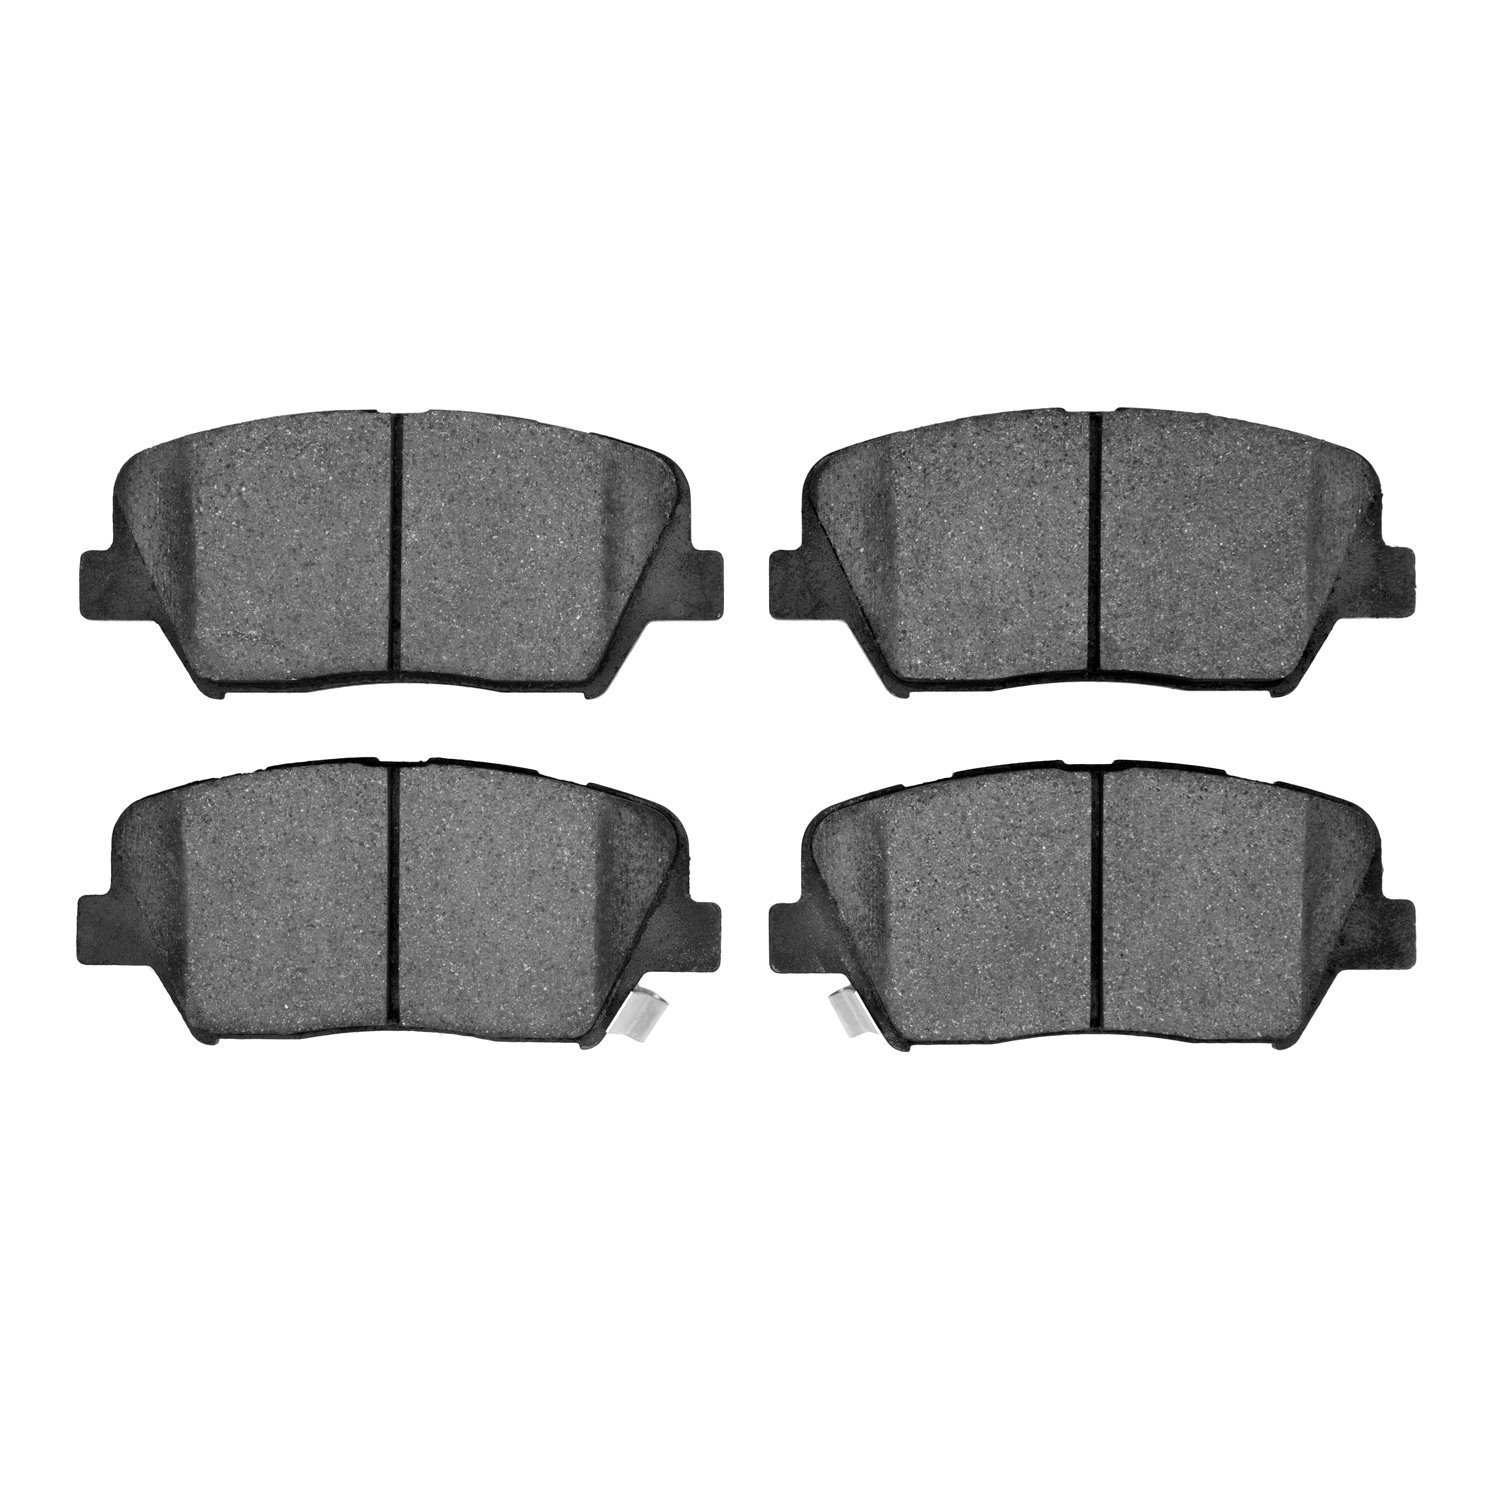 1551-1815-00 5000 Advanced Ceramic Brake Pads, Fits Select Kia/Hyundai/Genesis, Position: Front